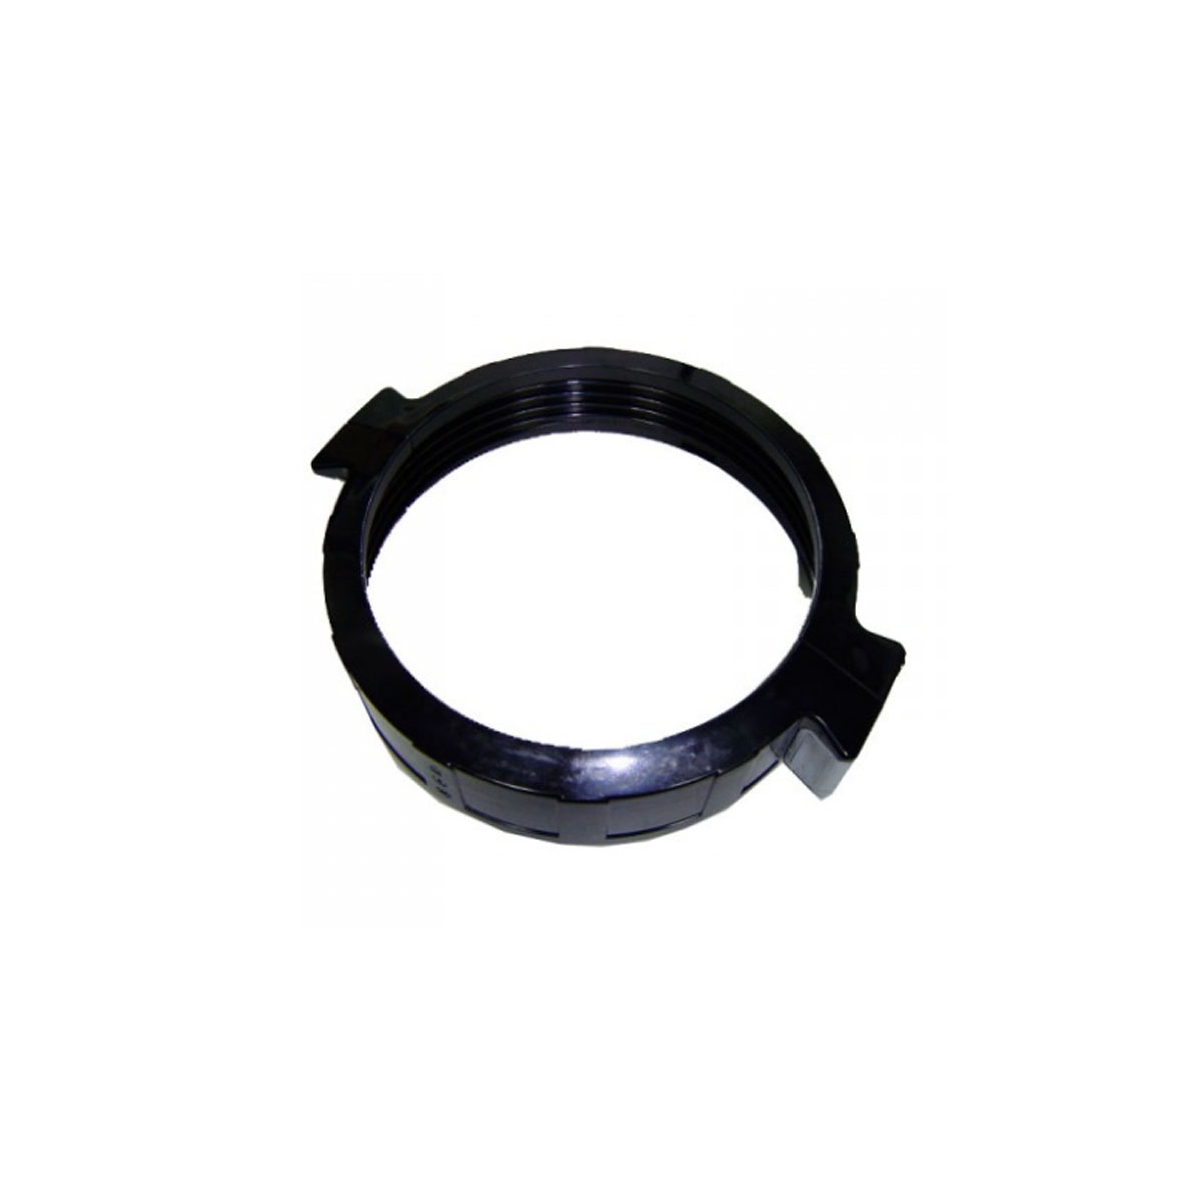 Astralpool filter split cover nut 4404180303